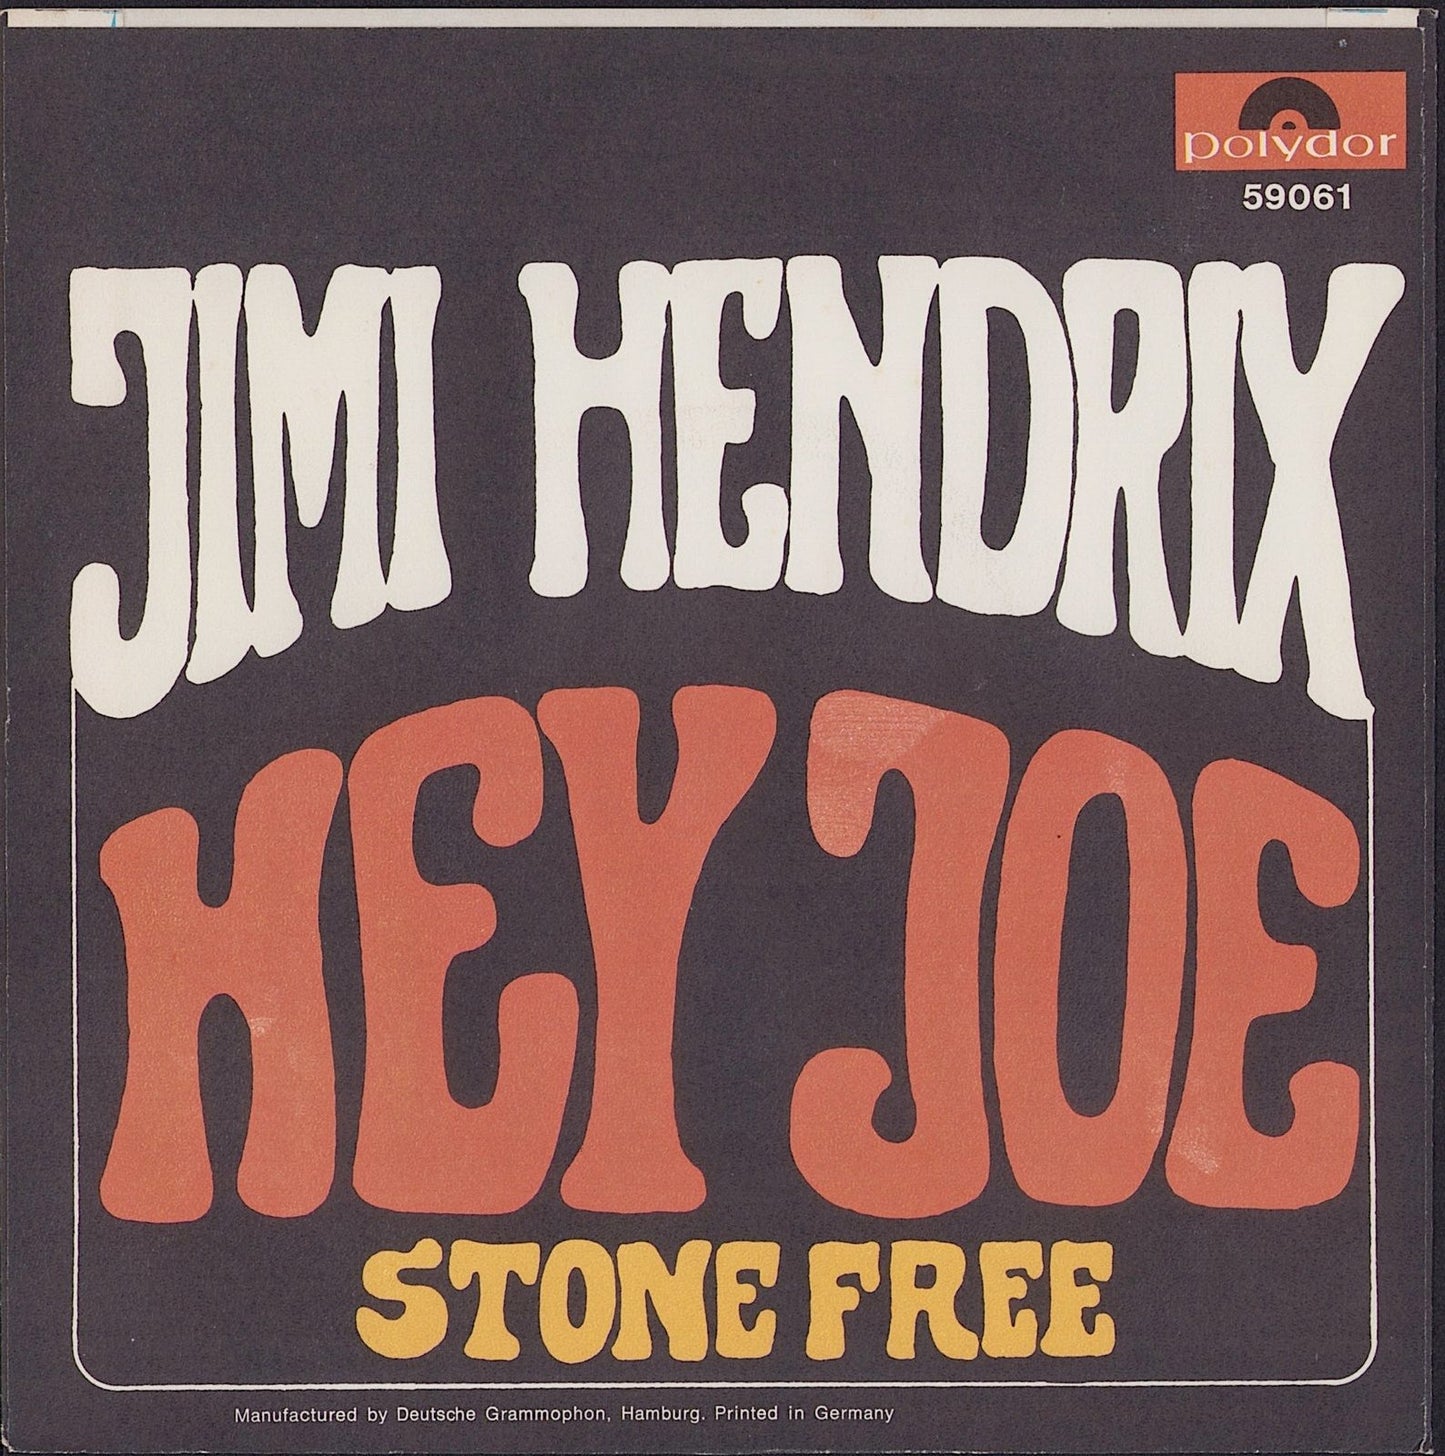 Jimi Hendrix - Hey Joe Vinyl 7"